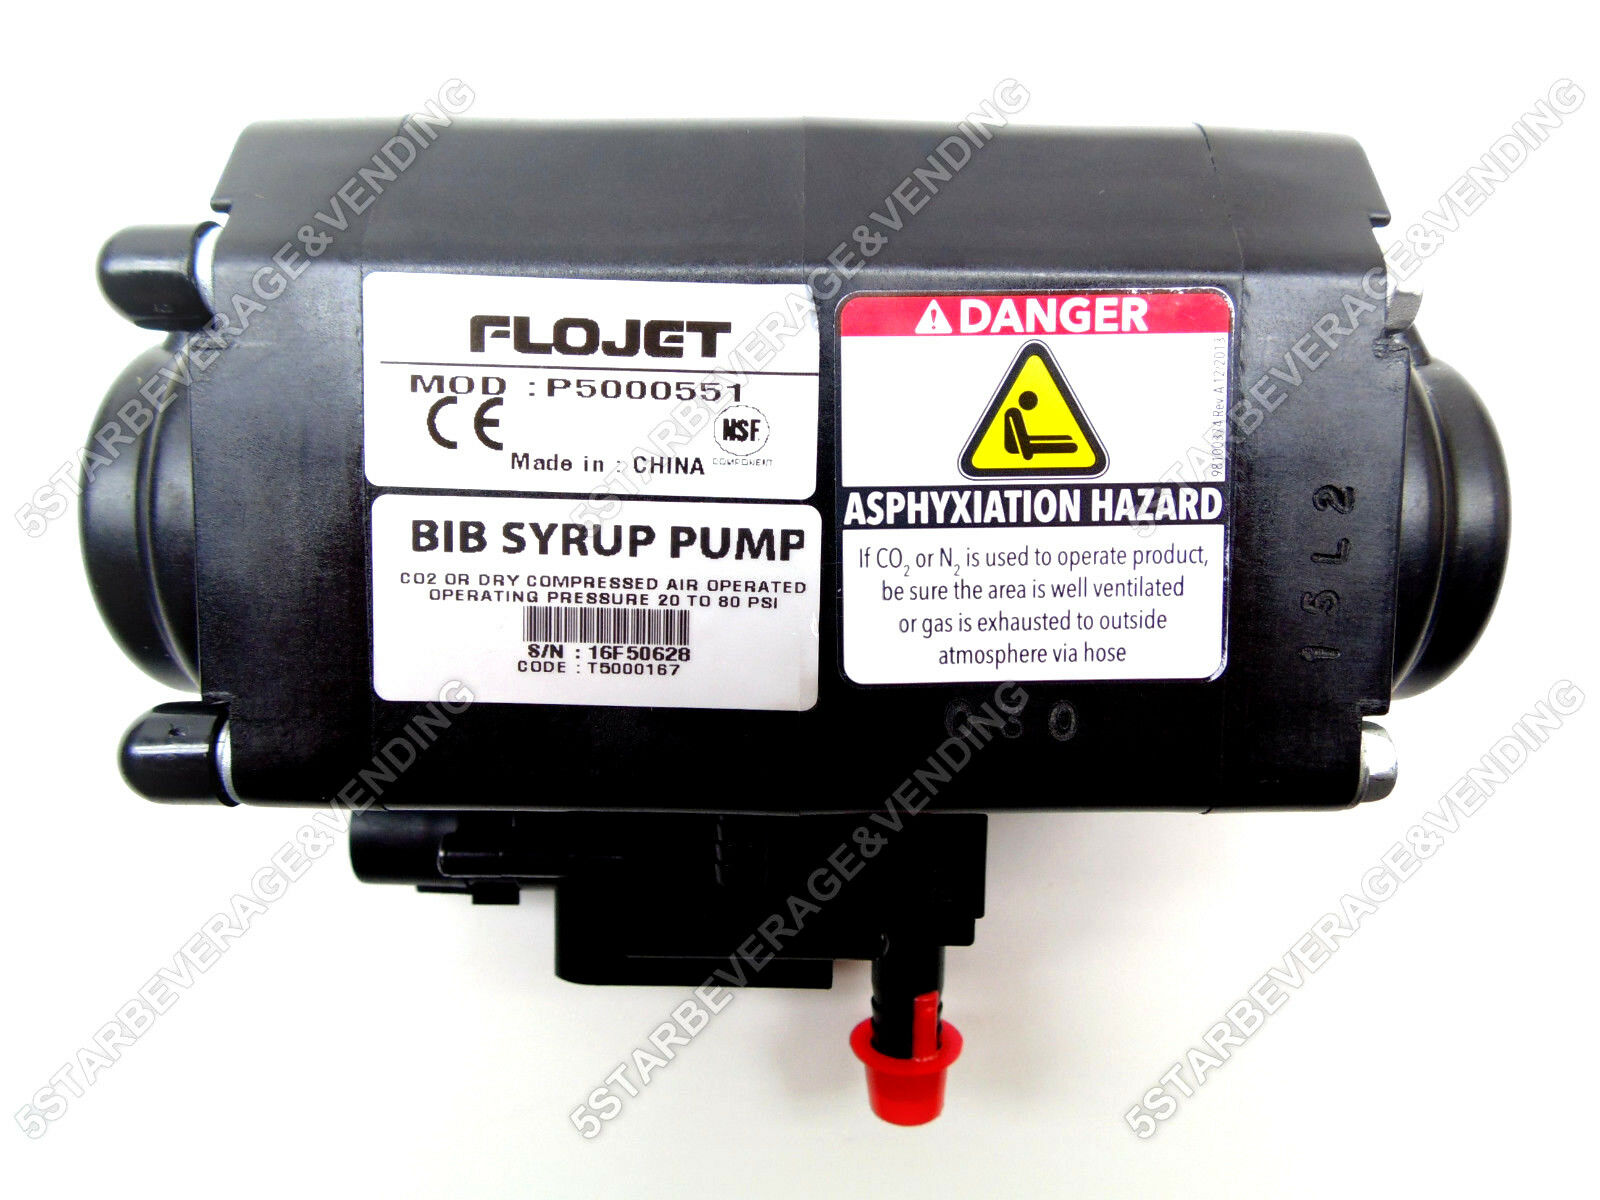 Flojet P5000551 Bag In Box Syrup Pump